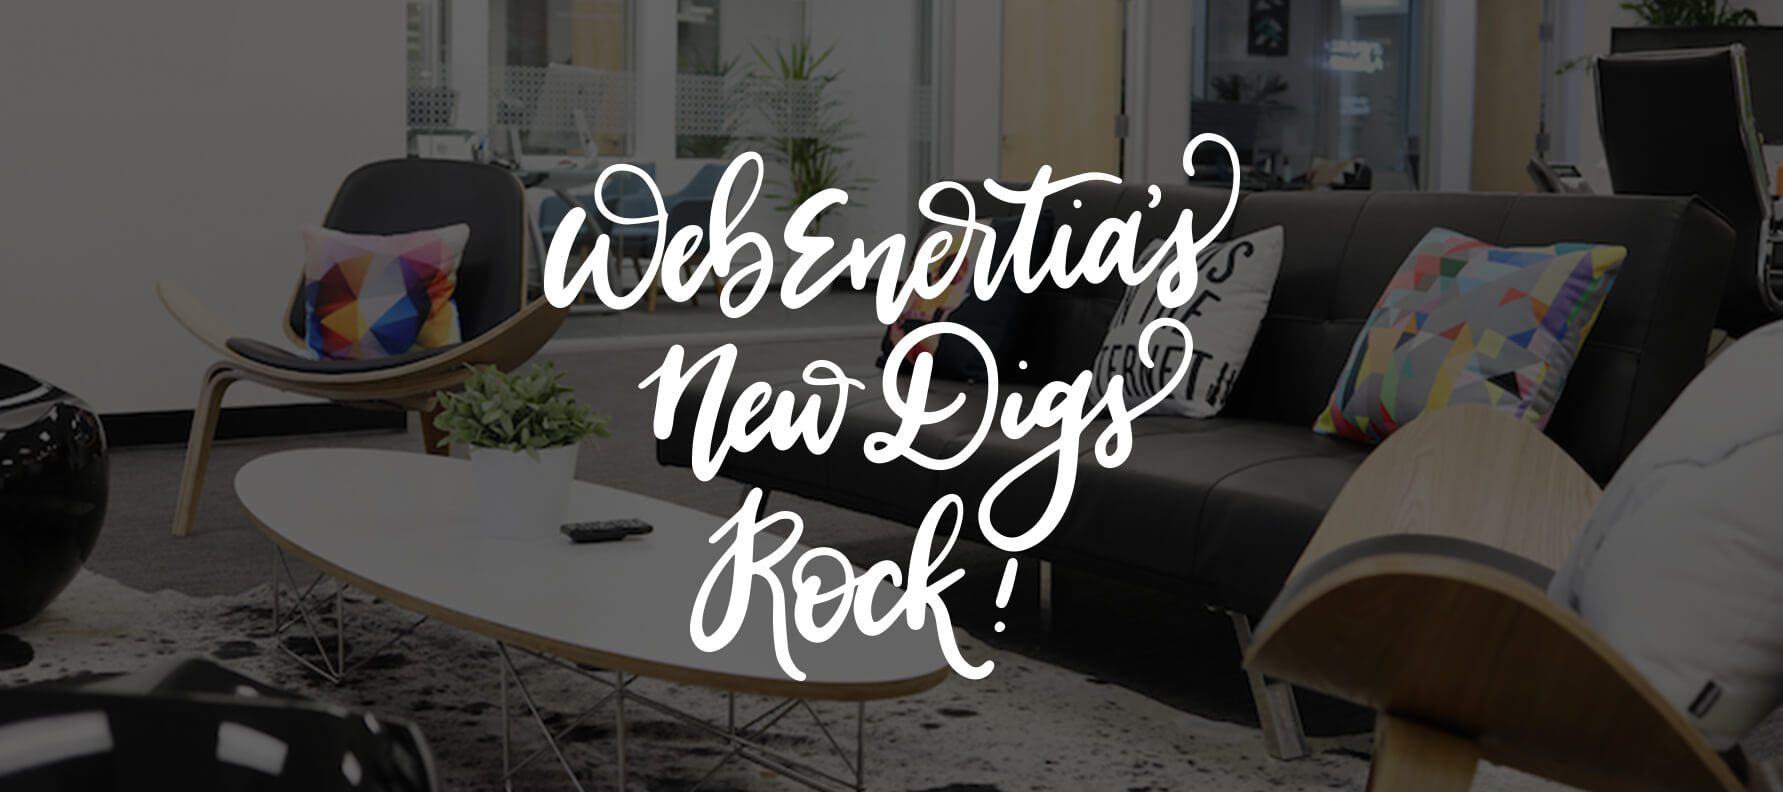 Clear Digital’s New Digs Rock